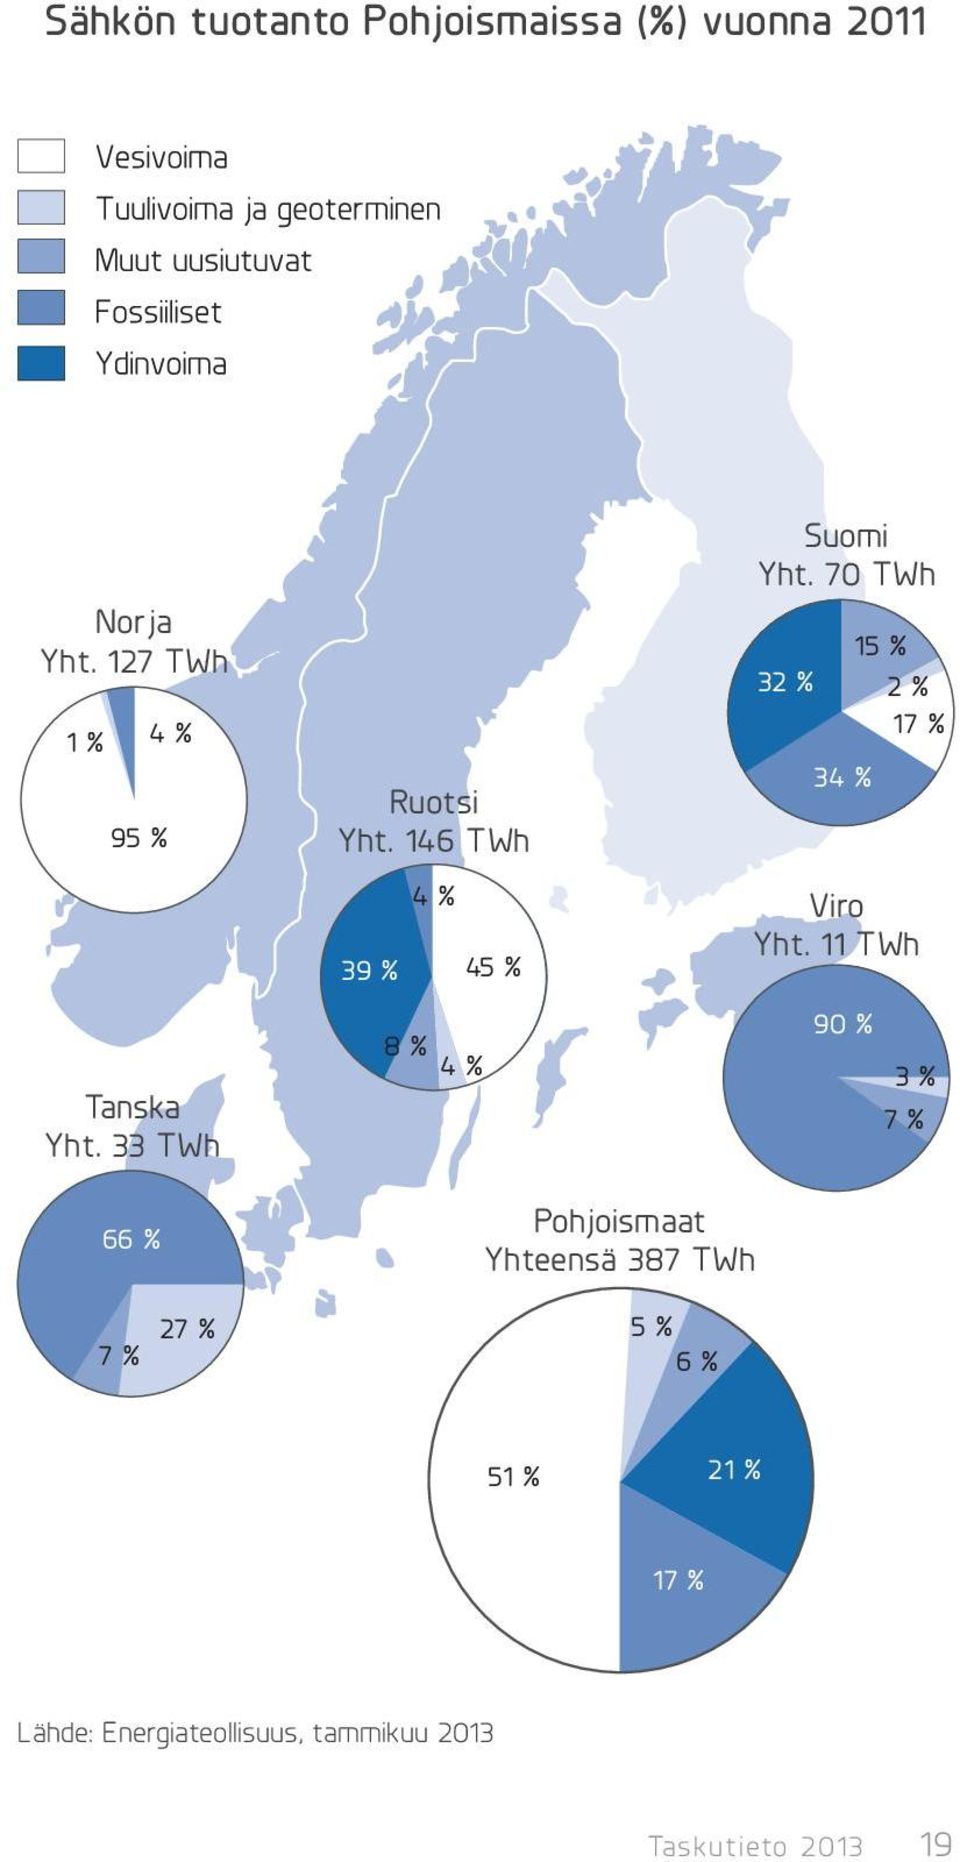 146 TWh 4 % 39 % 45 % 8 % 4 % Suomi Yht. 70 TWh 32 % 34 % Viro Yht.